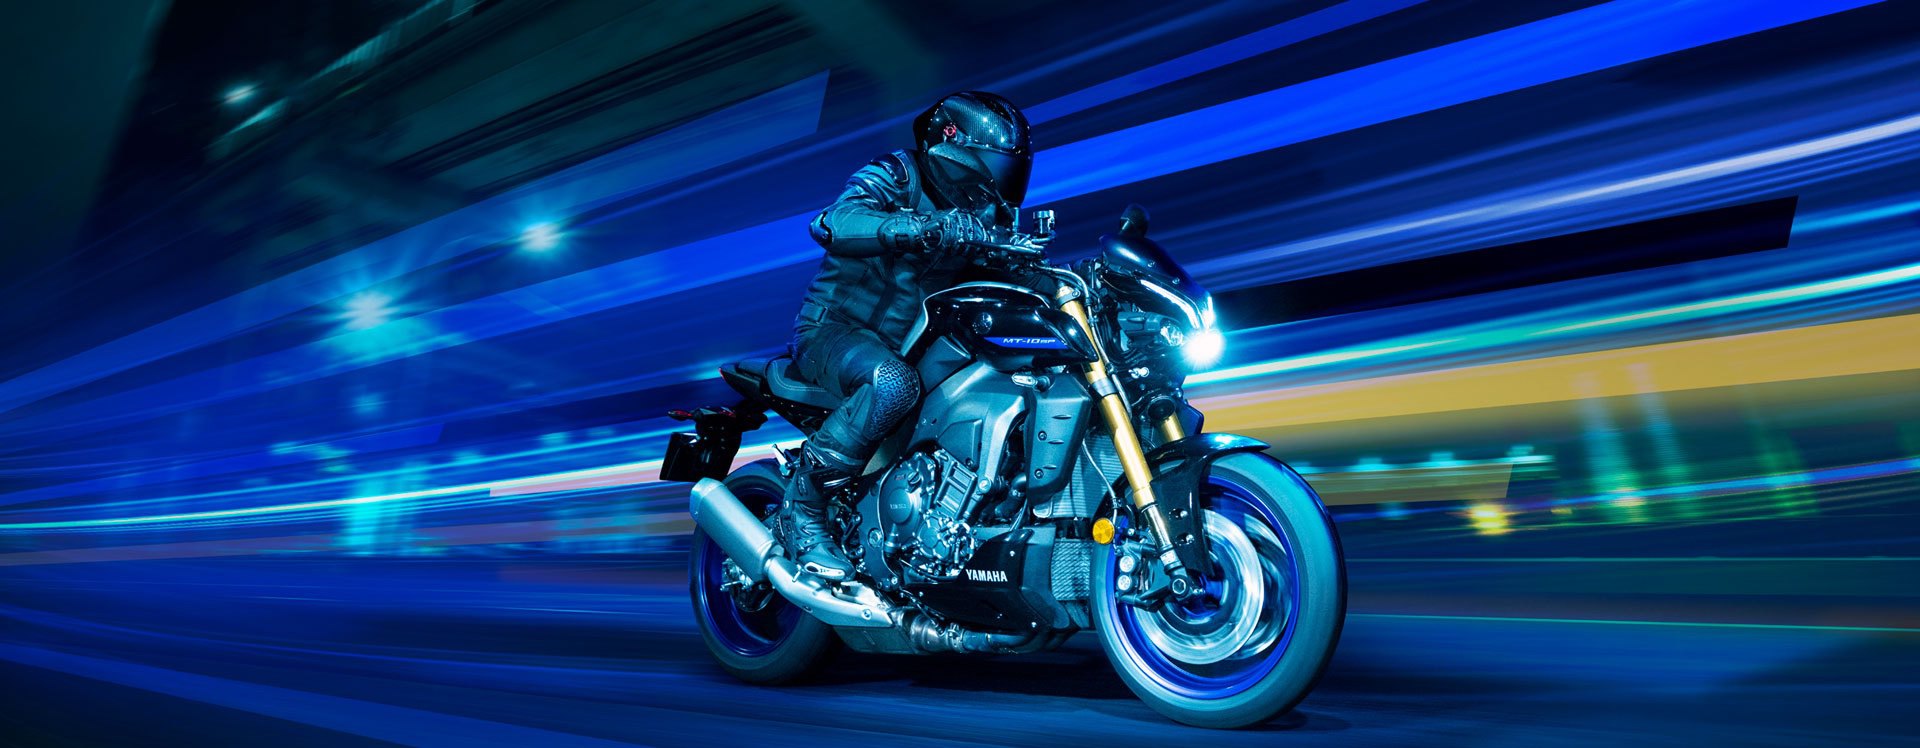 Yamaha 2022 MT-10 SP motorcycle on a Japanese freeway at night